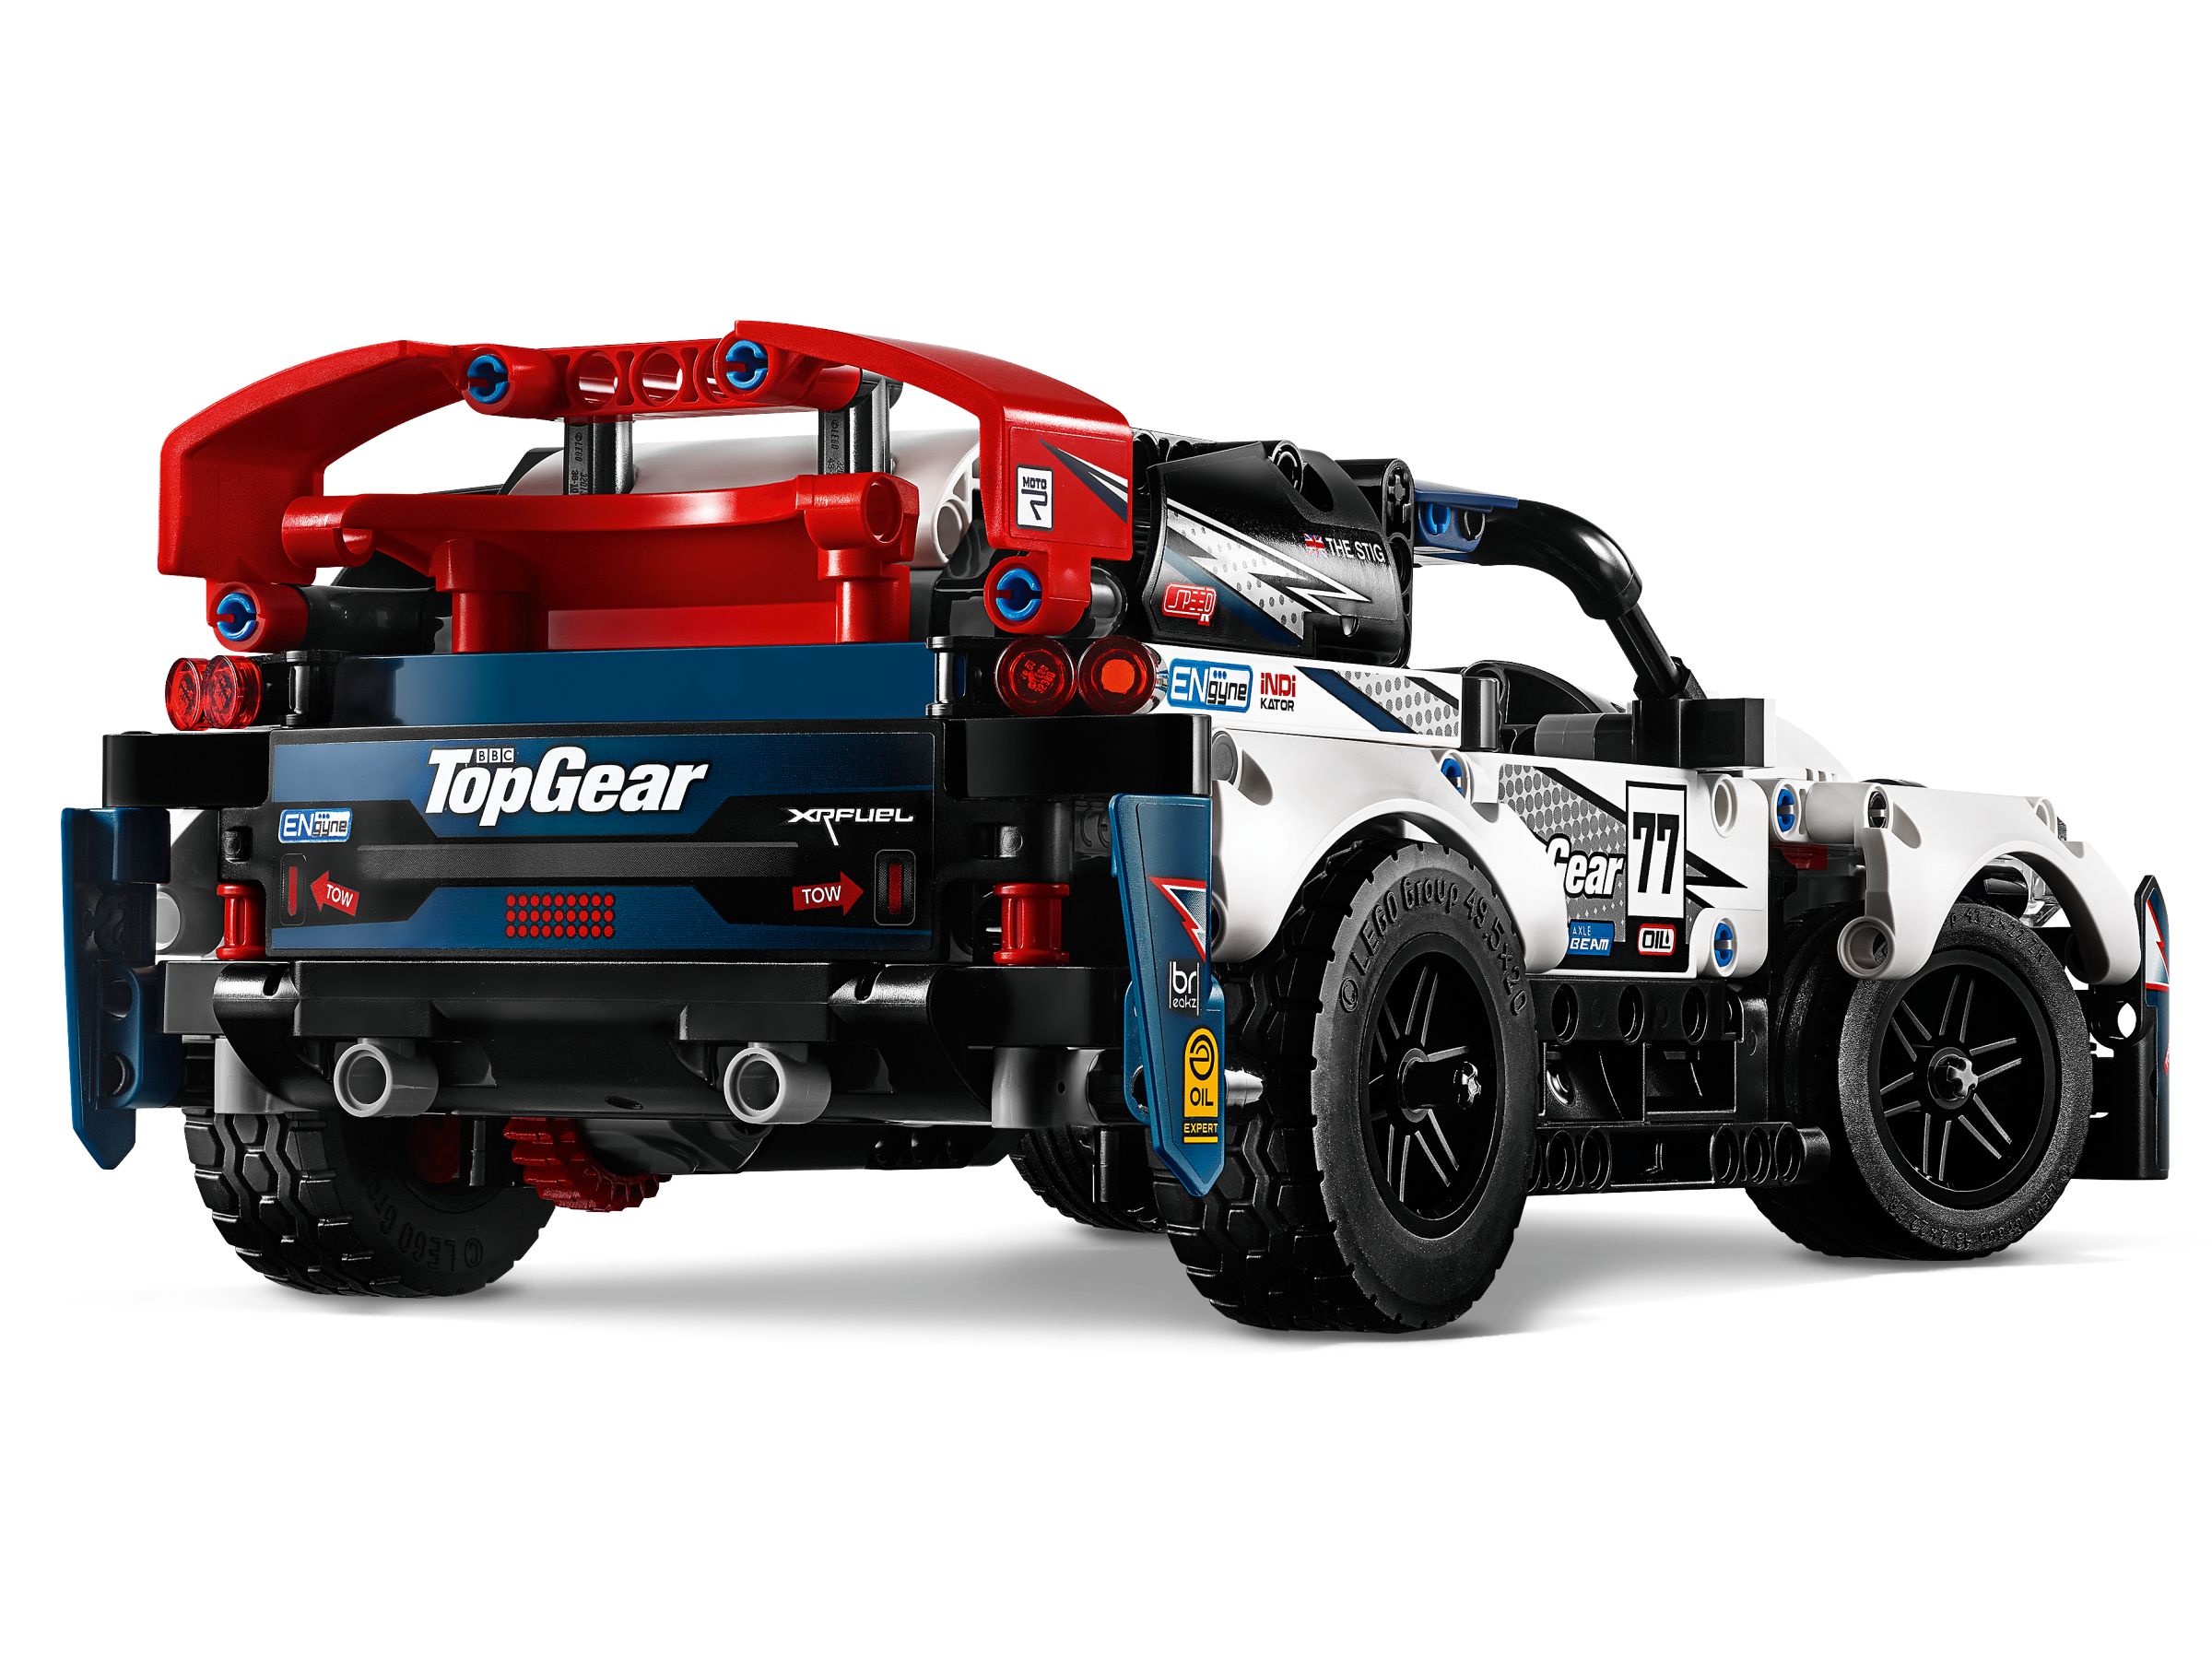 LEGO Technic 42109 Top-Gear Ralleyauto mit App-Steuerung LEGO_42109_alt3.jpg